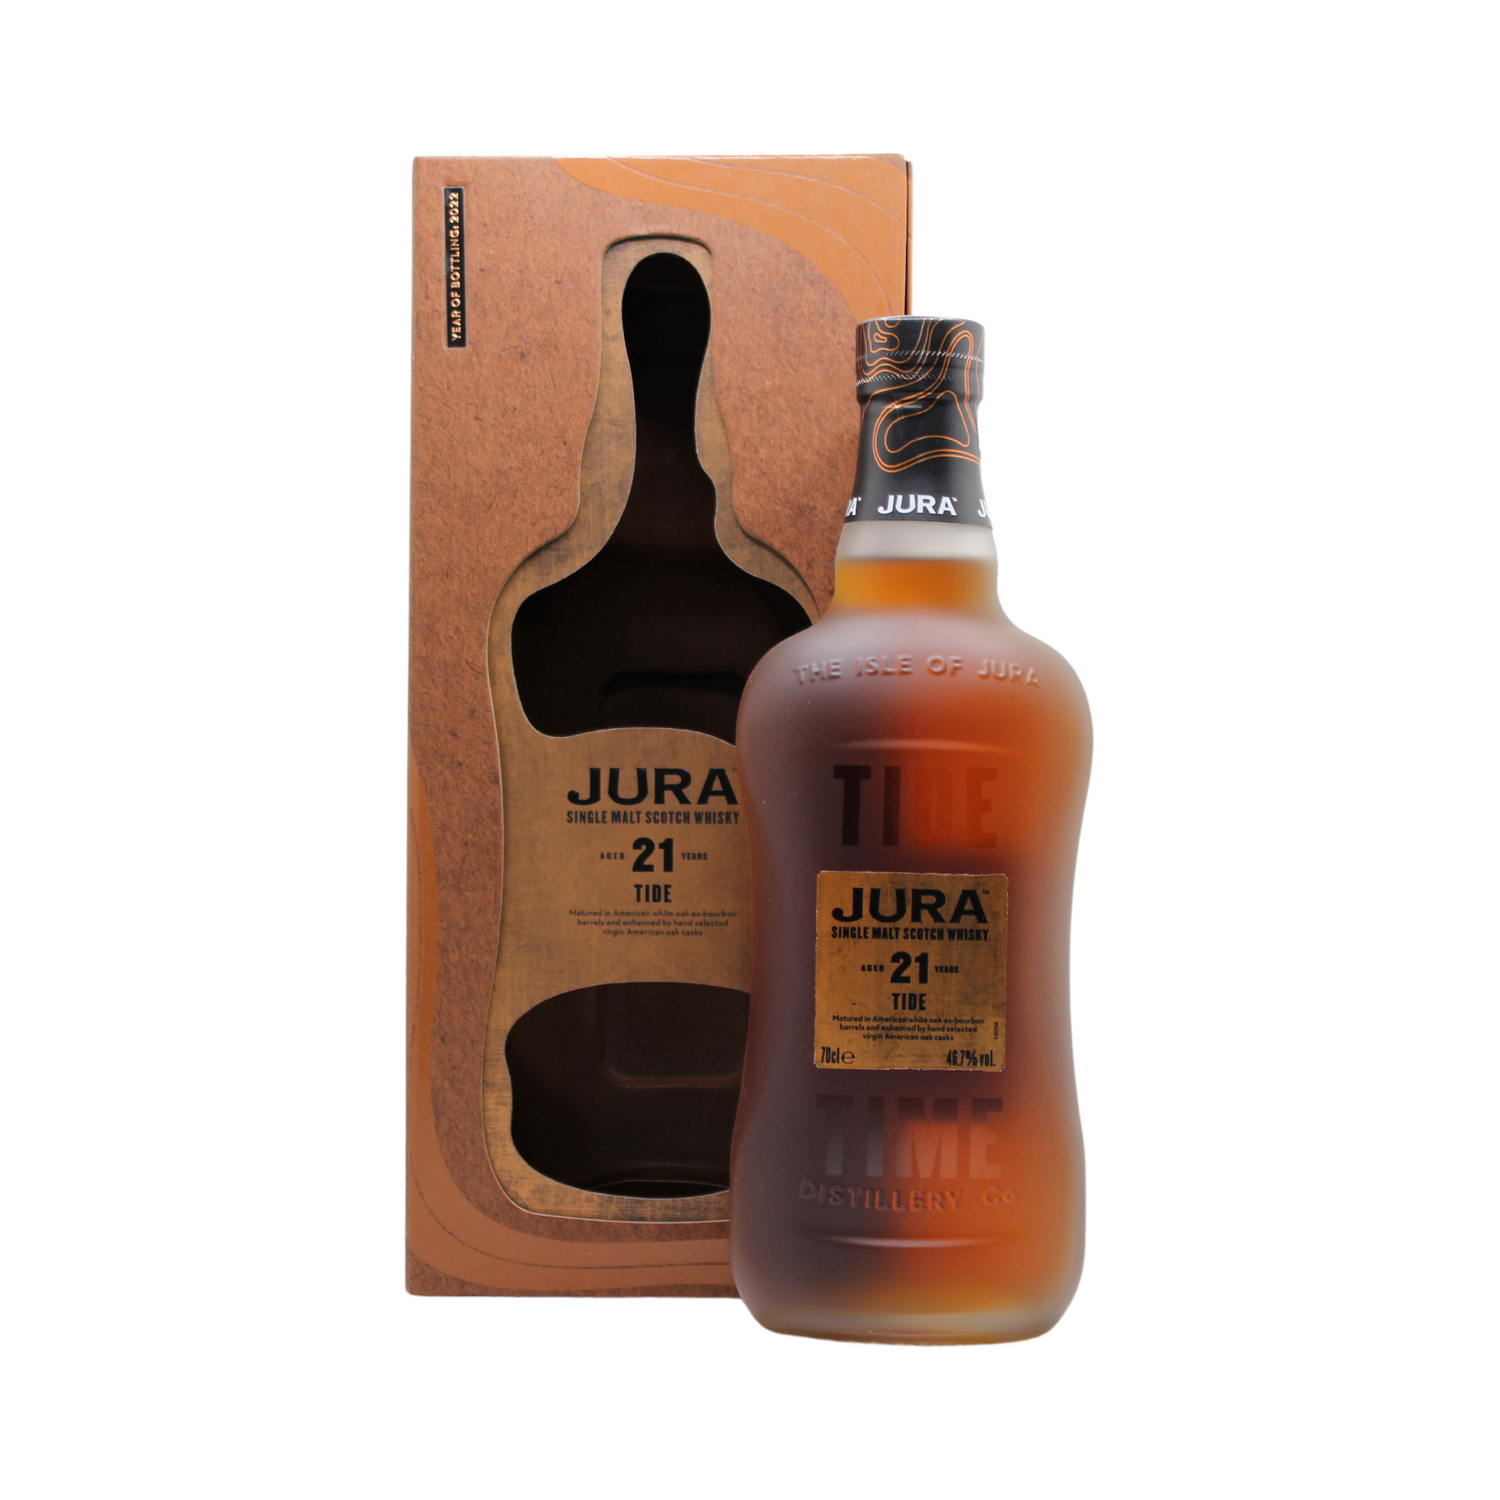 Jura 21 Y/O Tide Single Malt Scotch Whisky